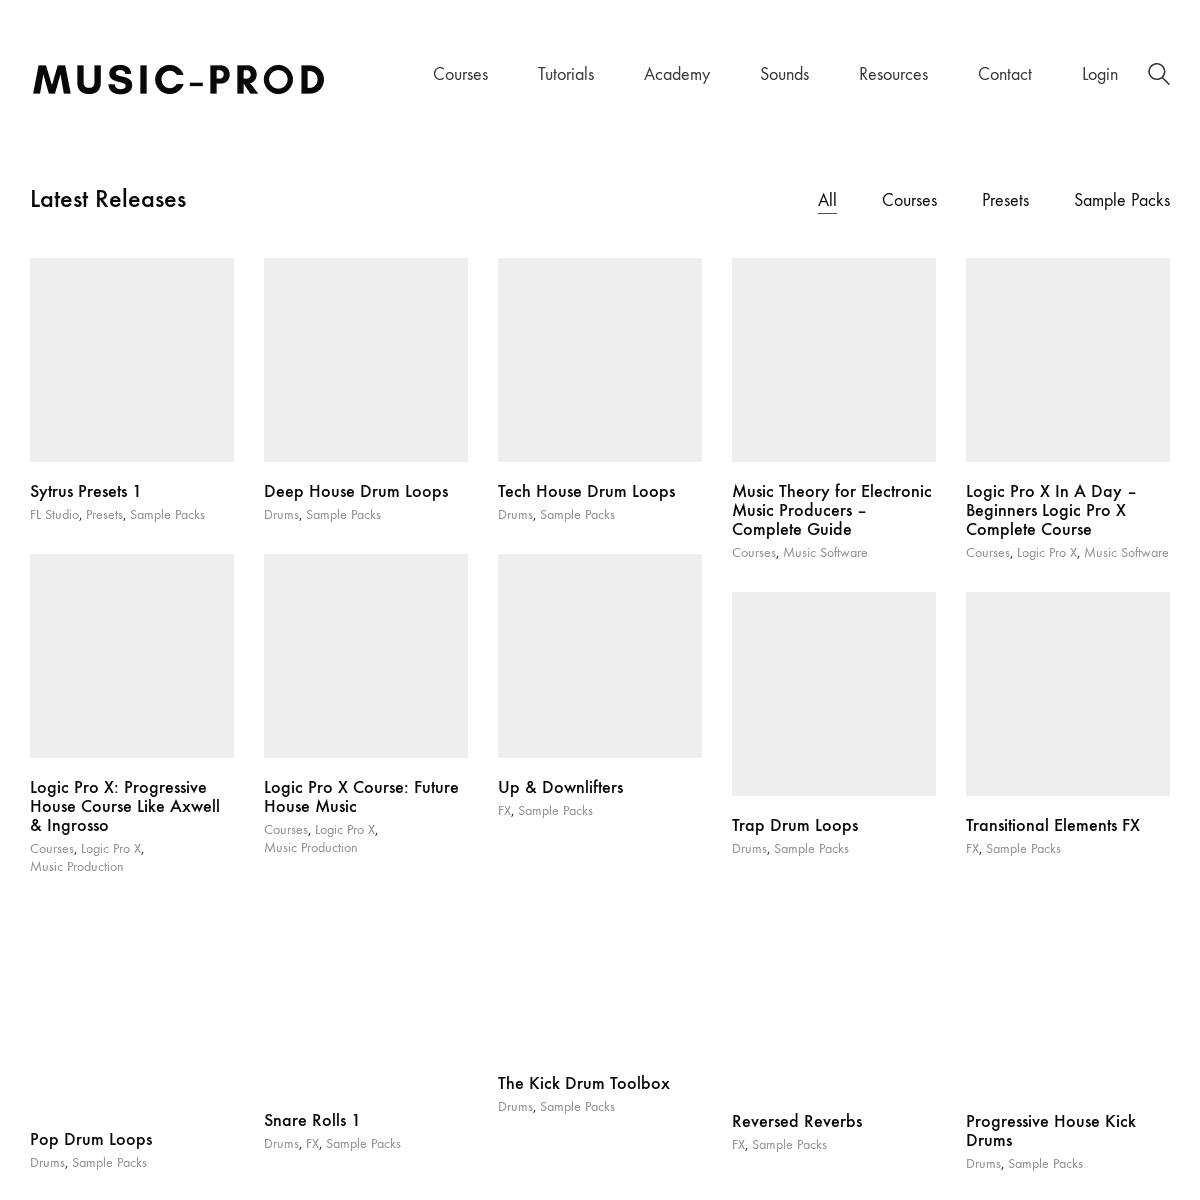 A complete backup of music-prod.com